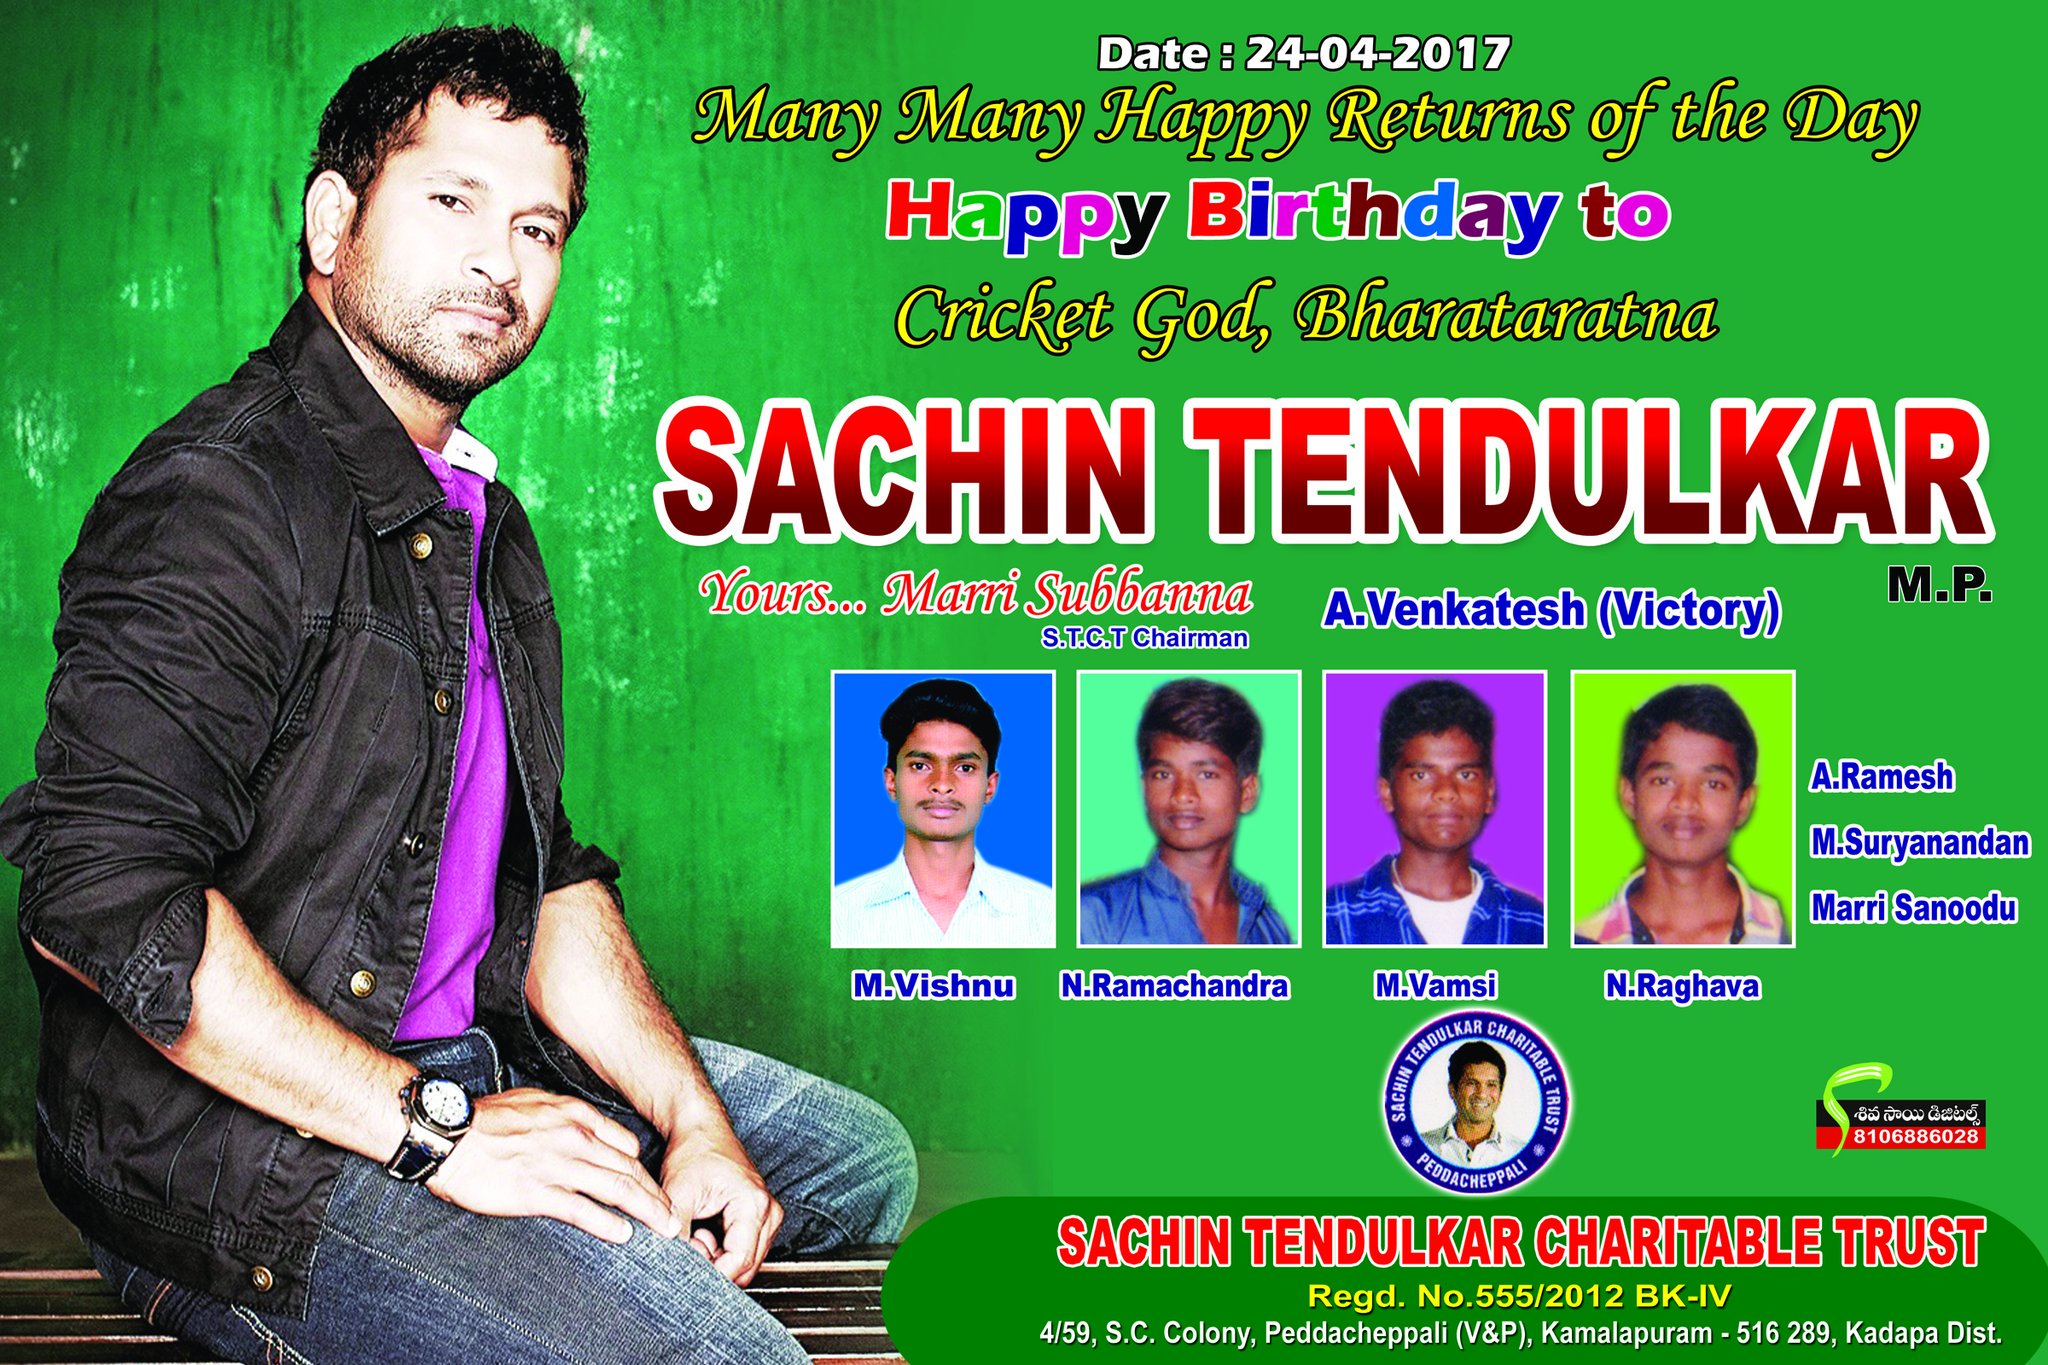 Happy Birthday to you cricket god bharataratna Sachin Tendulkar sir 